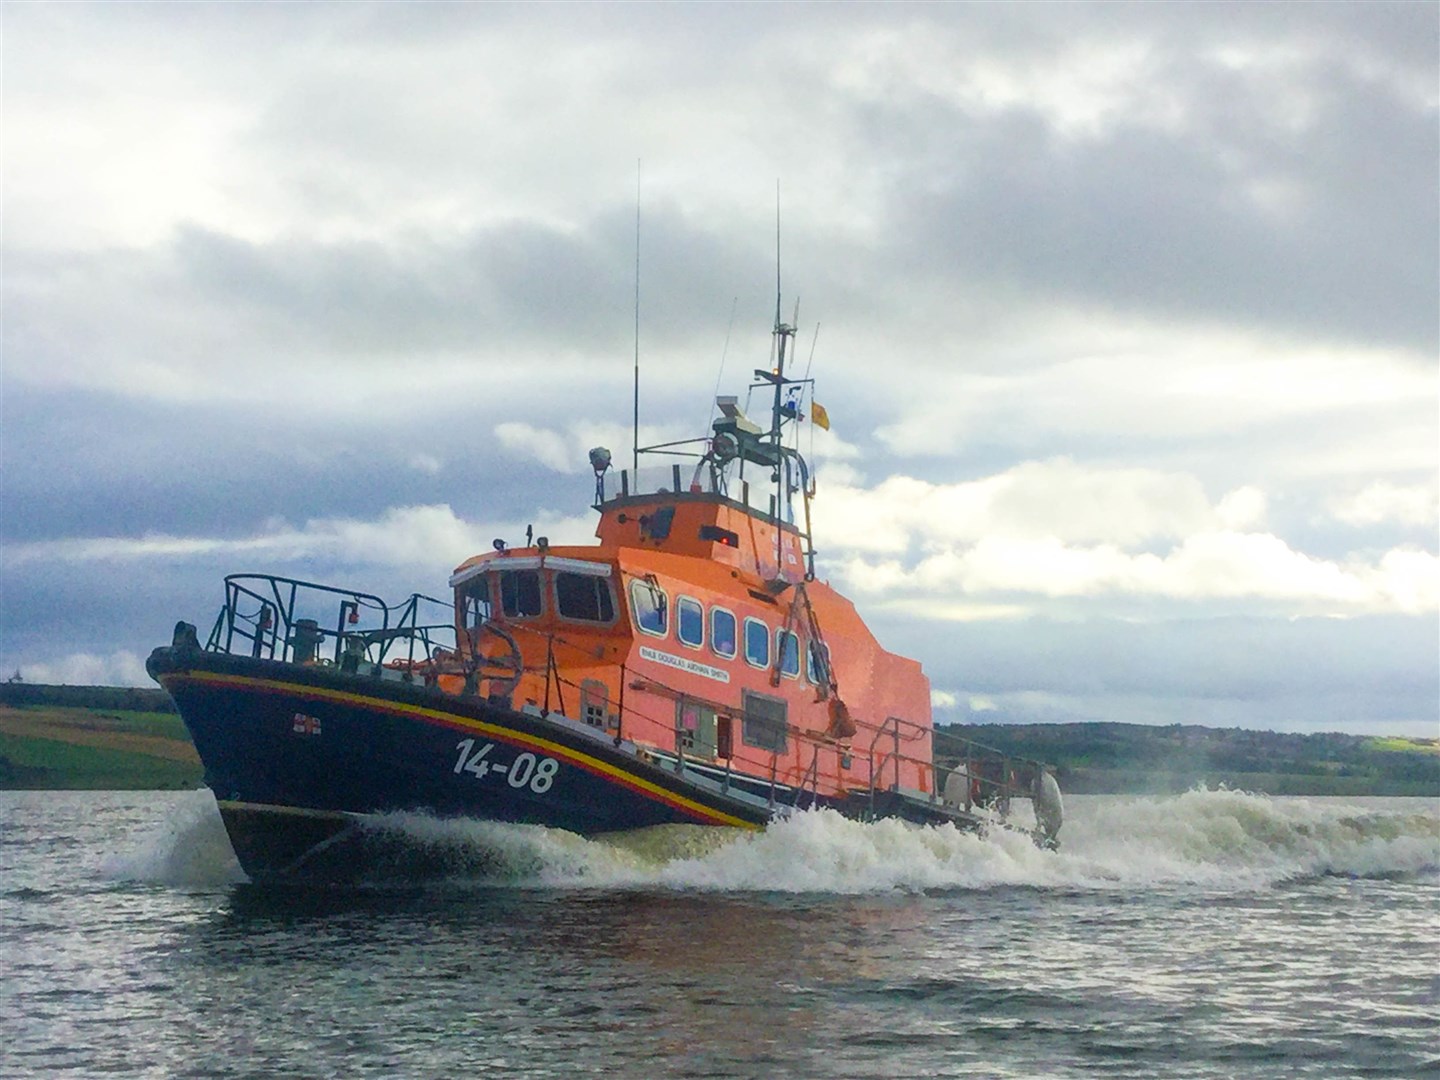 The Invergordon lifeboat.